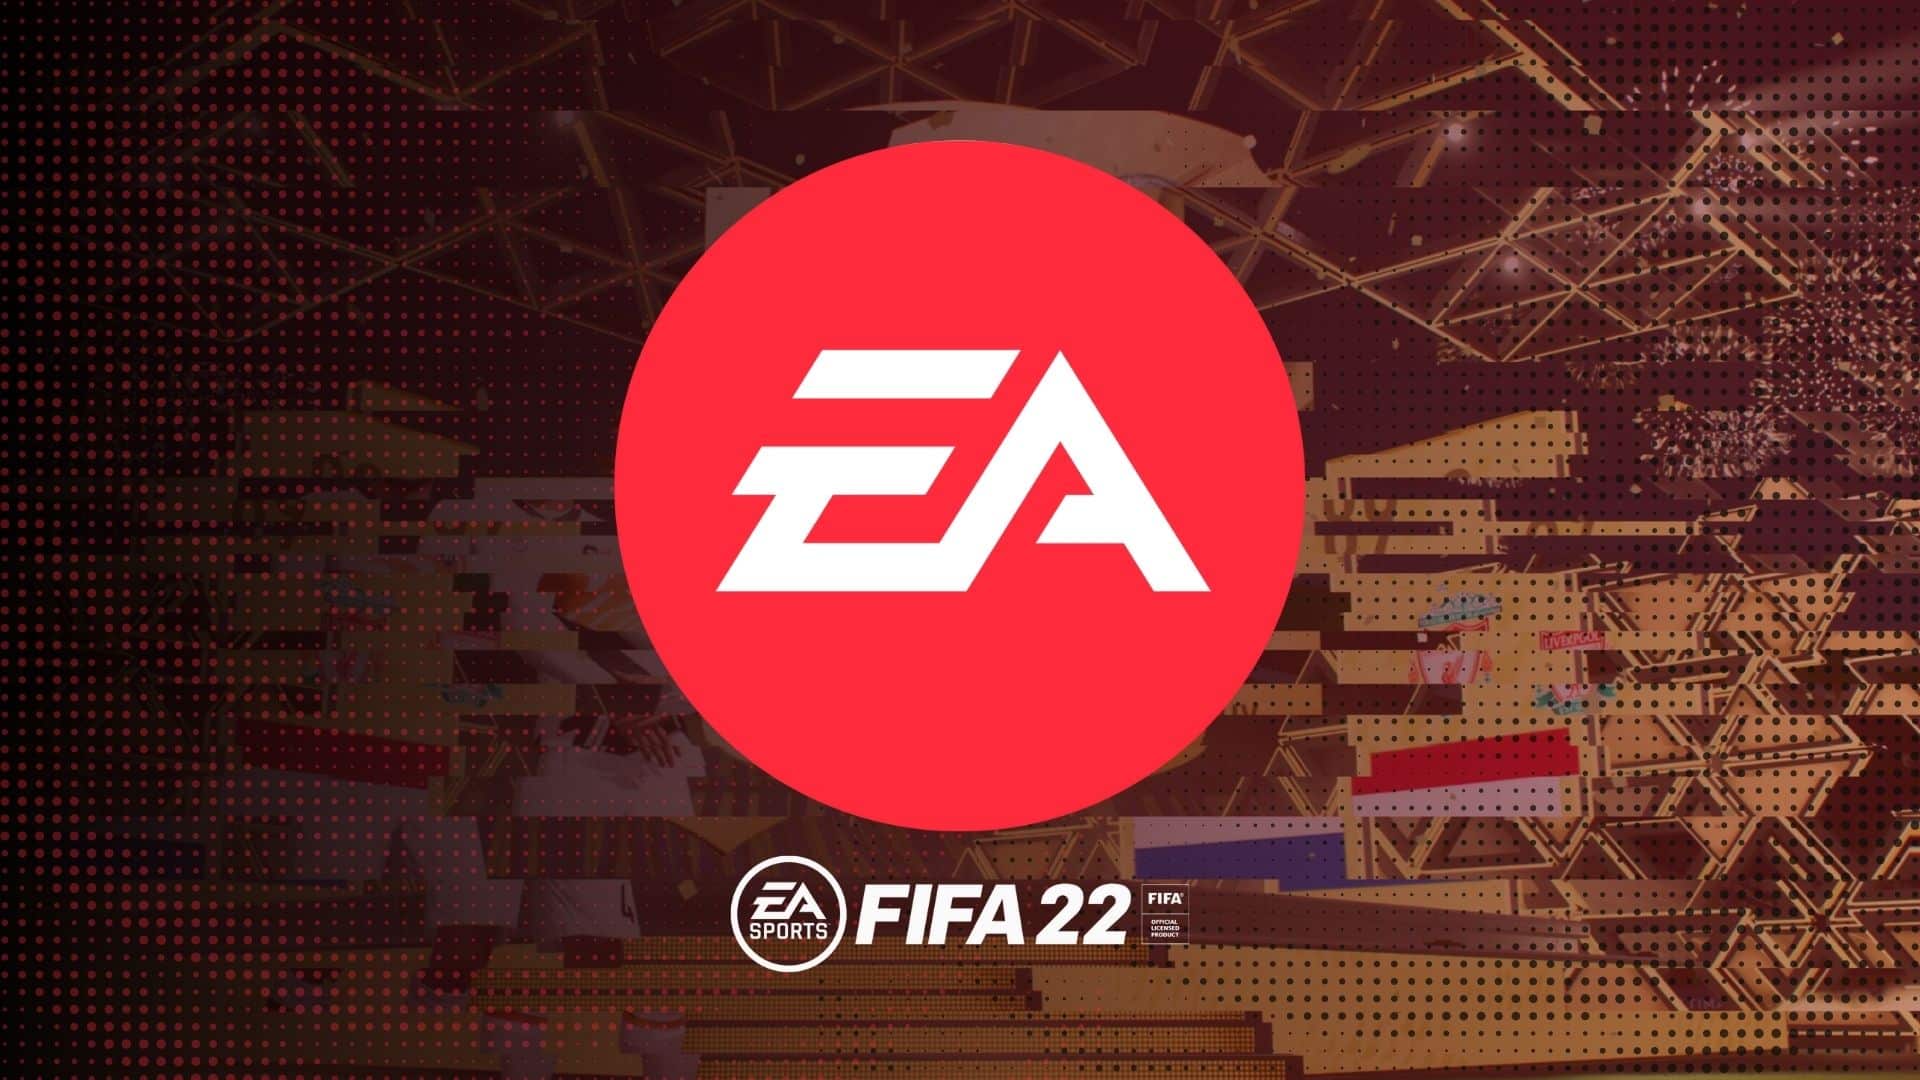 ea sports logo with fifa 22